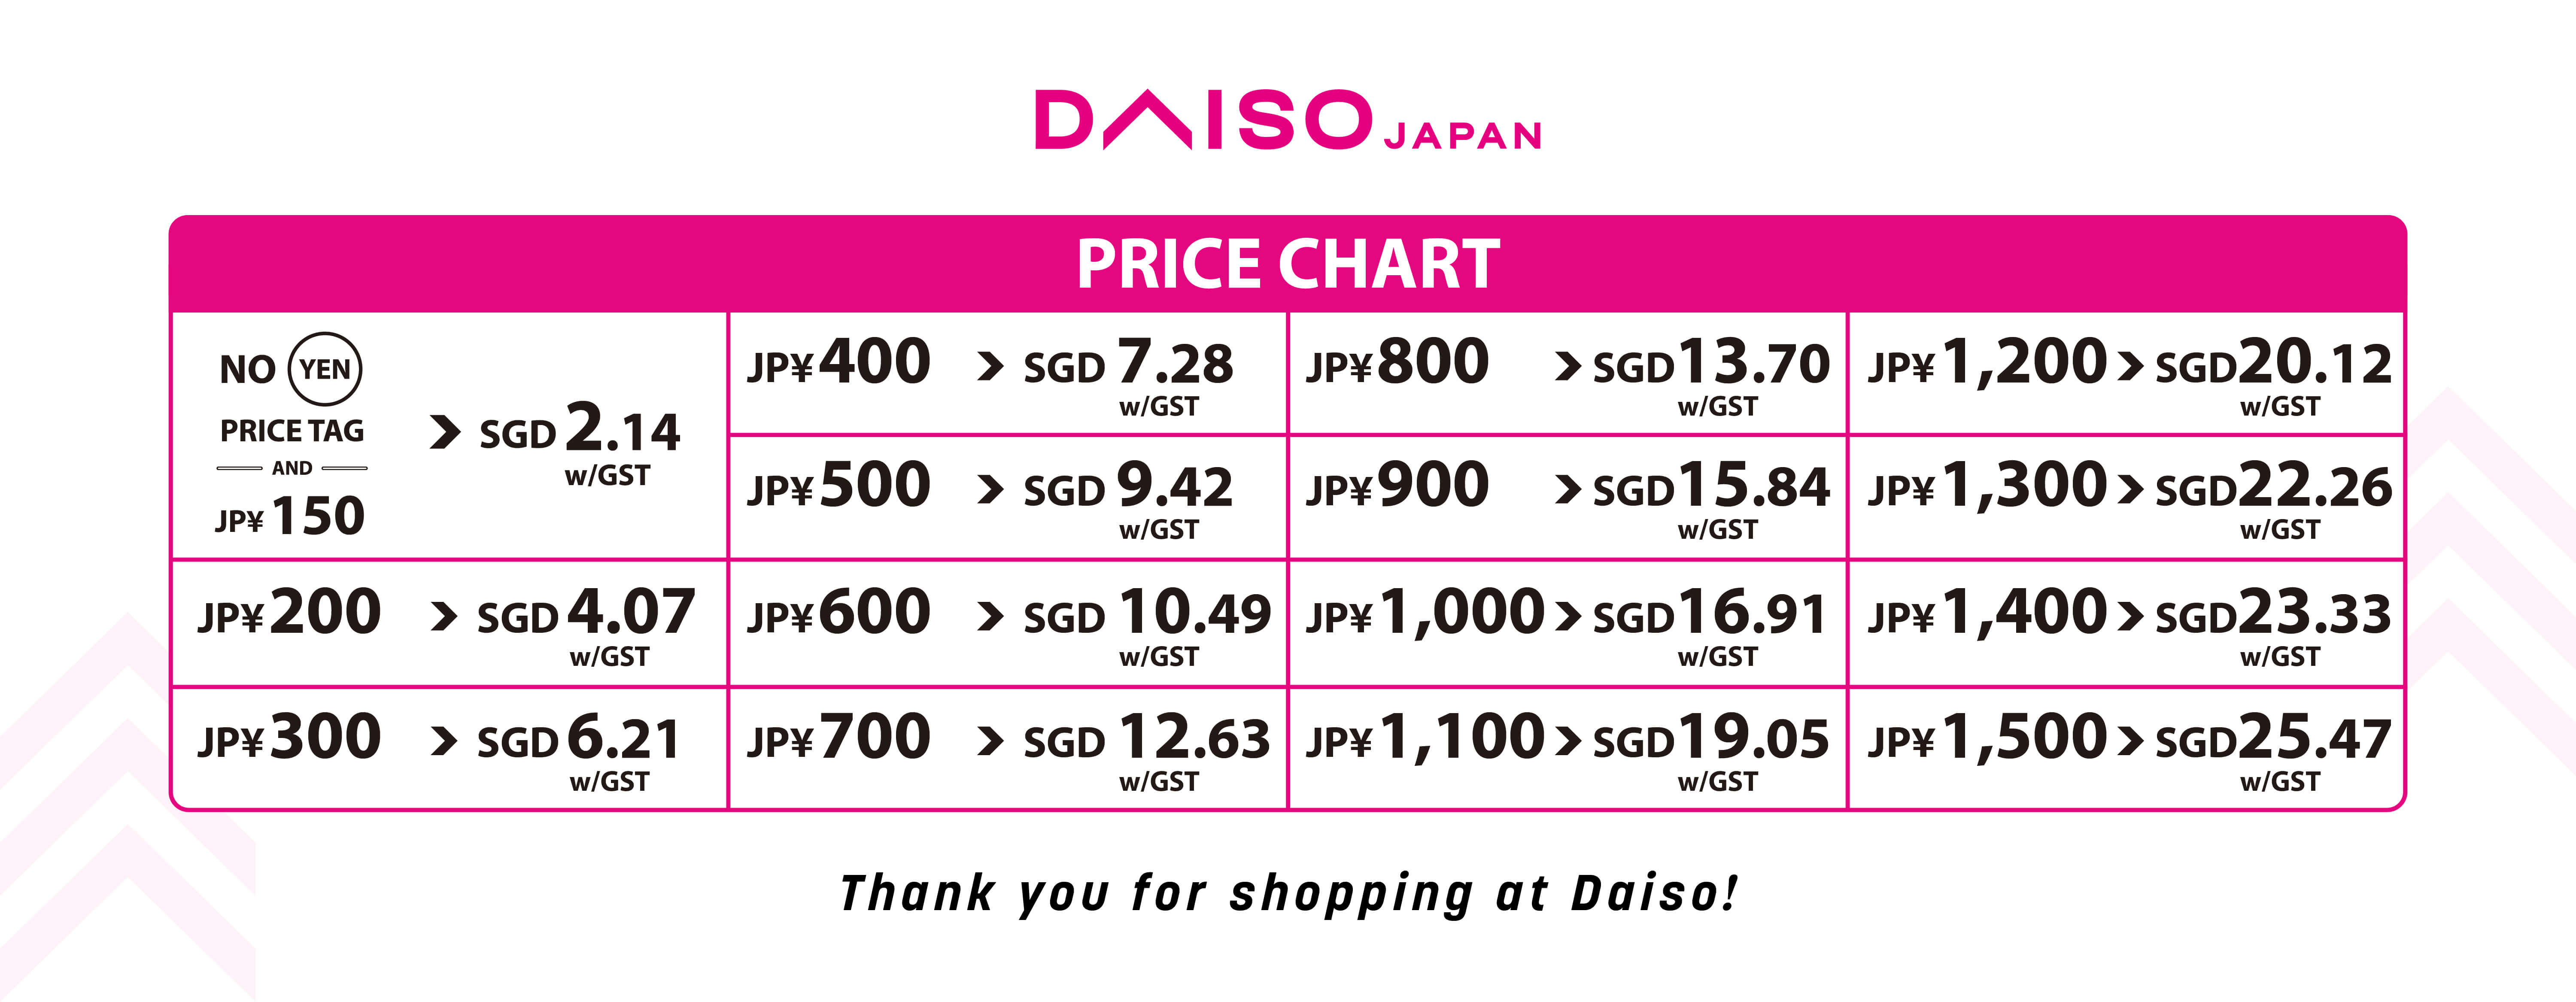 Daiso Price Change